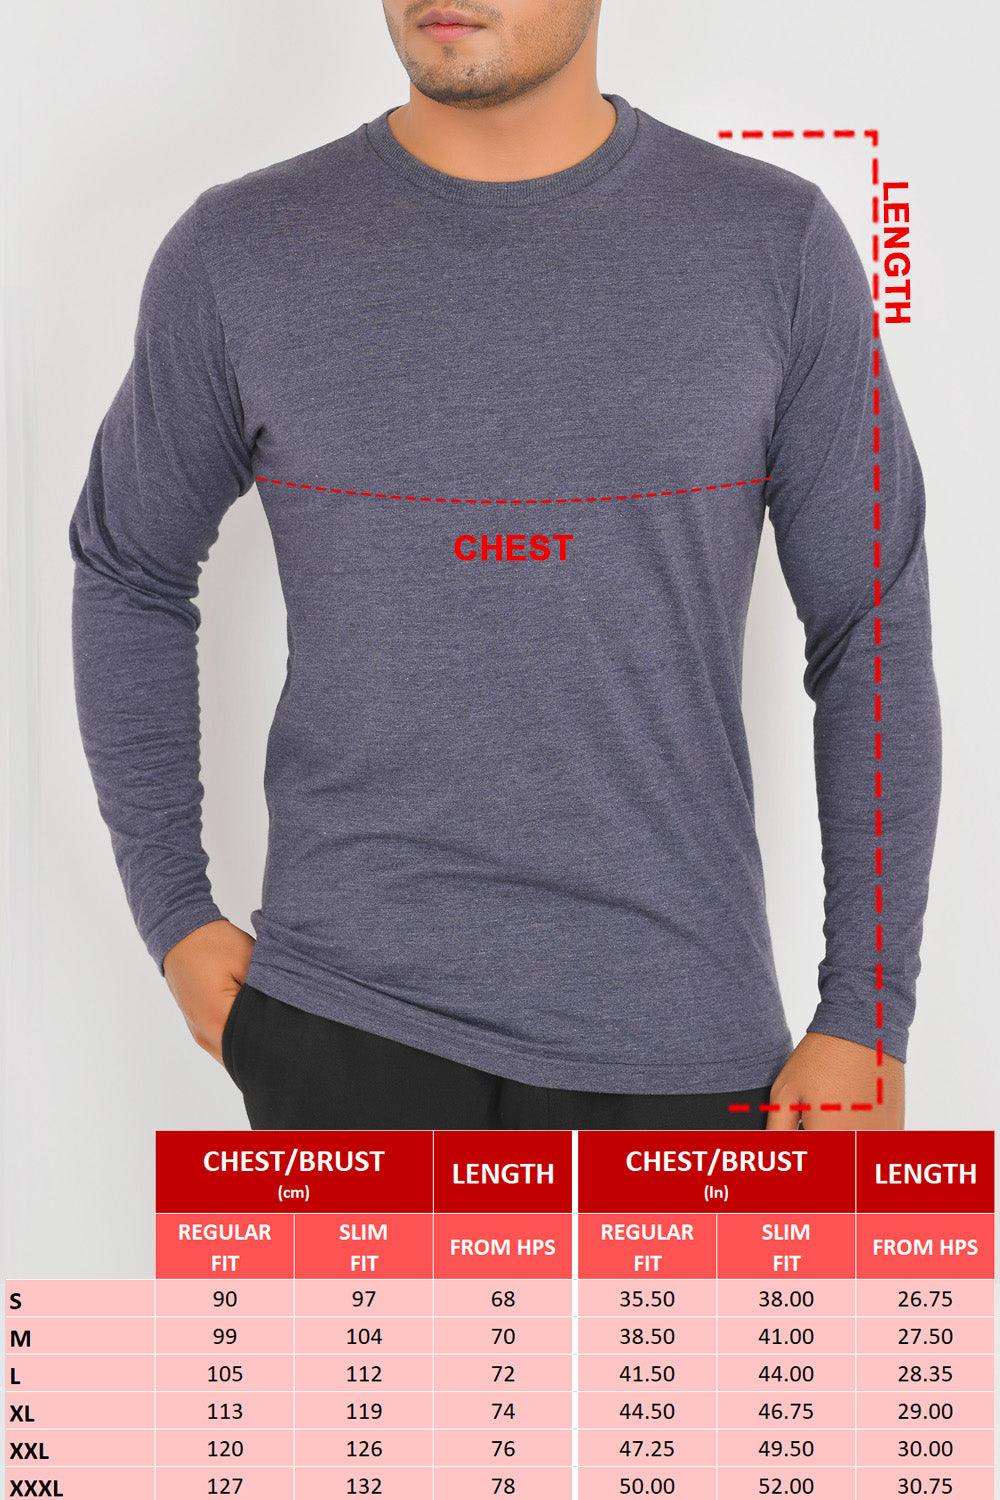 Long Sleeve Round Neck T-Shirts | SLATE - AQUA - LAGOON - TAN - FTS